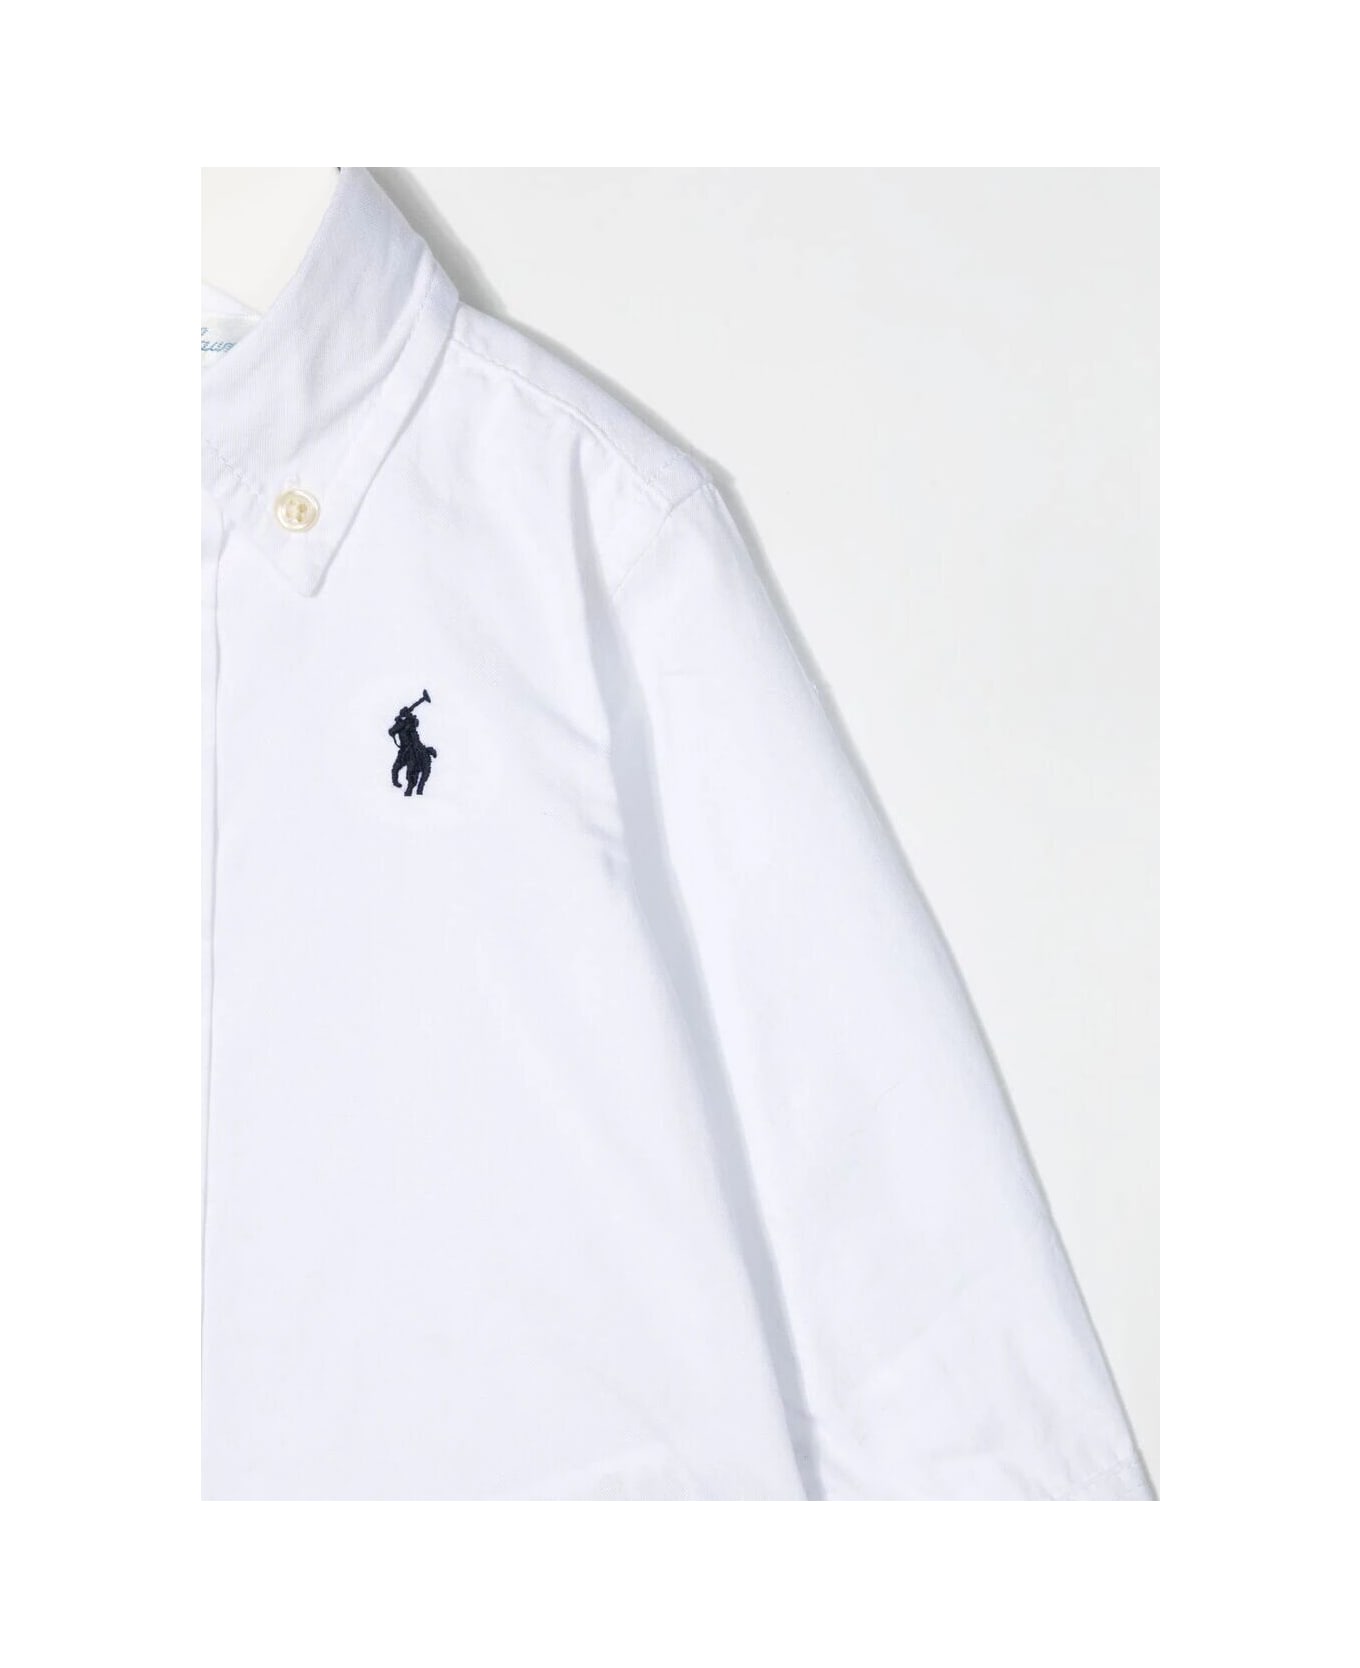 Polo Ralph Lauren Slim Fit Tops Shirt - White